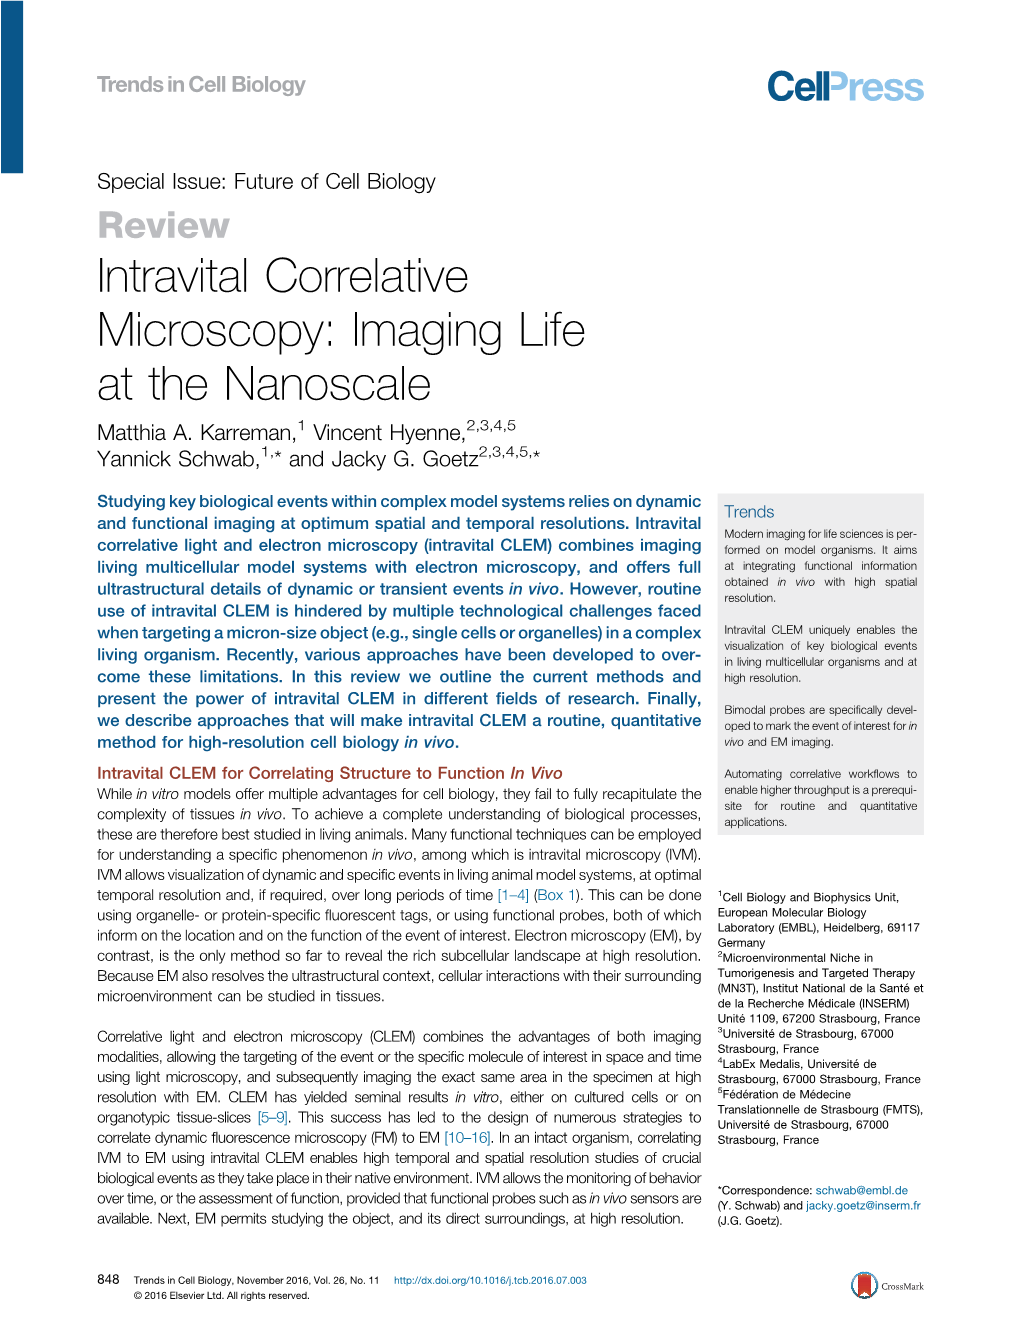 Intravital Correlative Microscopy